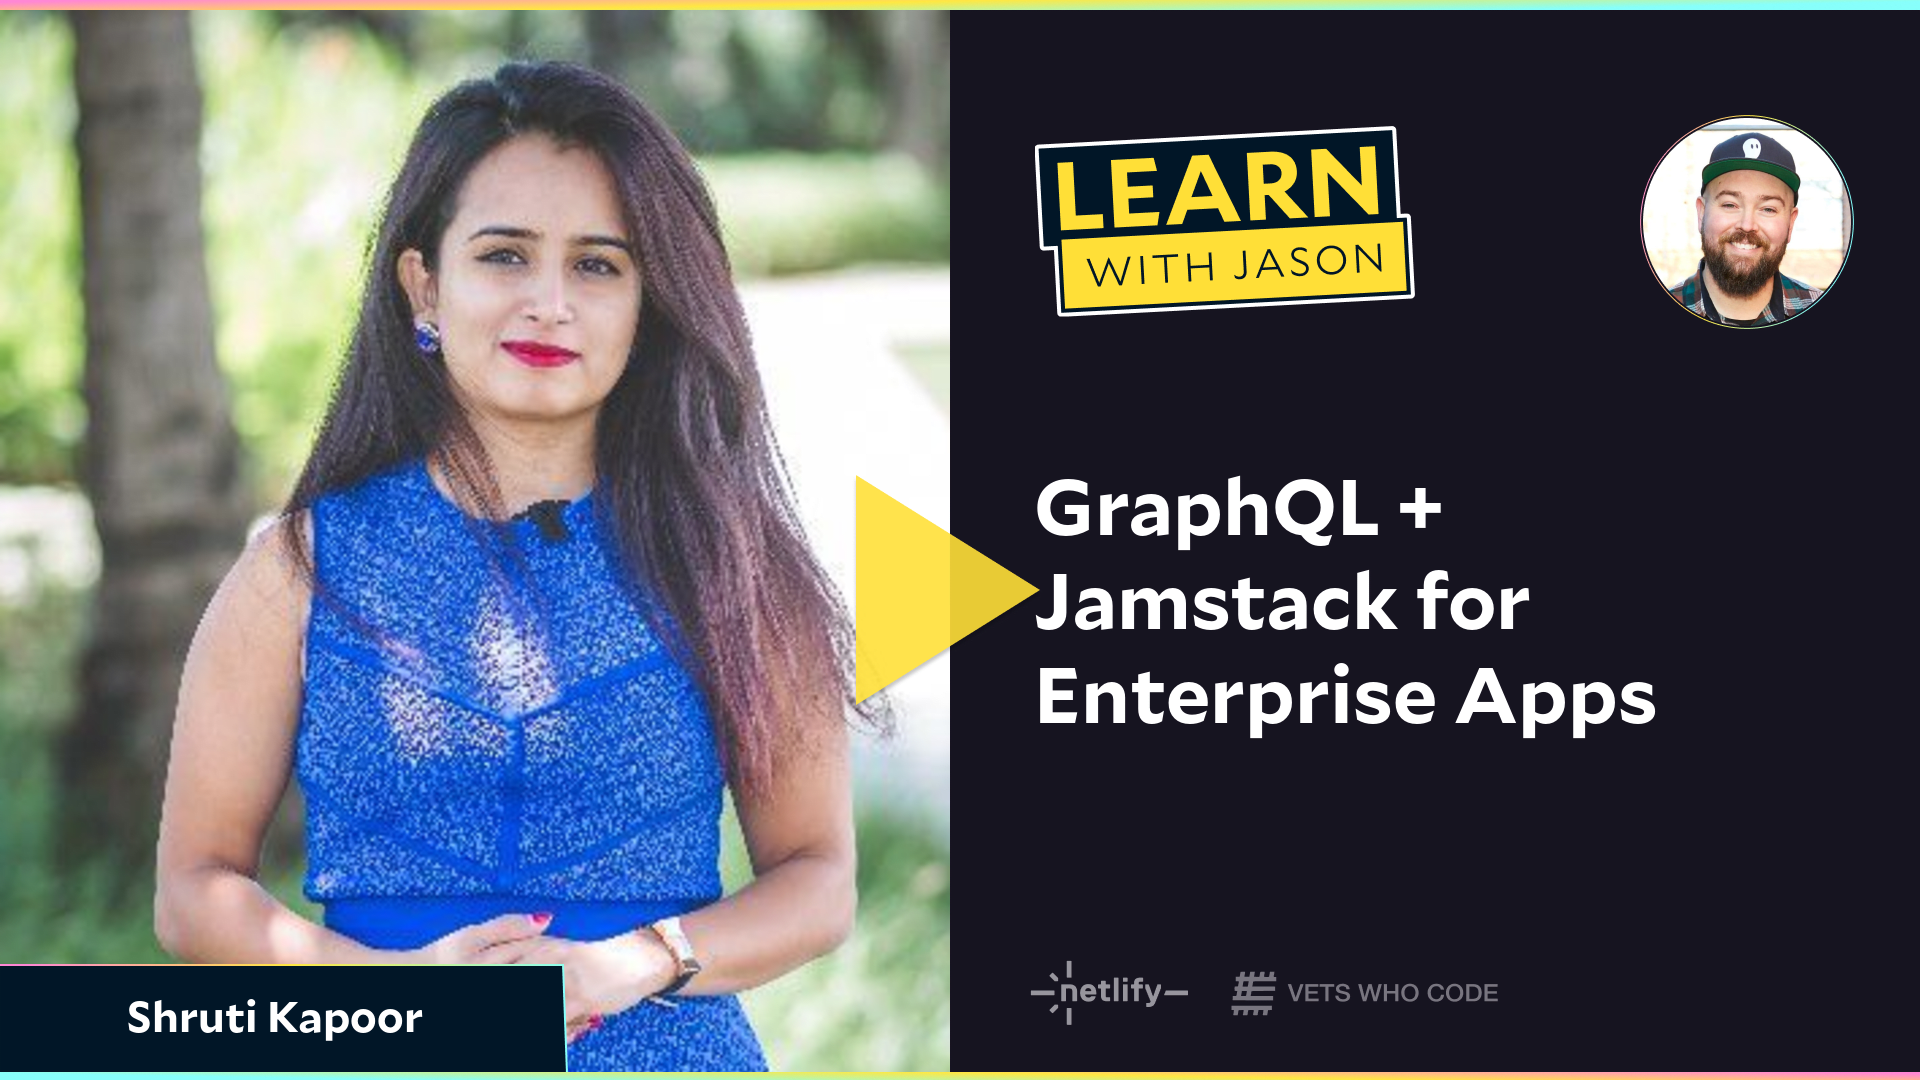 GraphQL + Jamstack for Enterprise Apps (with Shruti Kapoor)